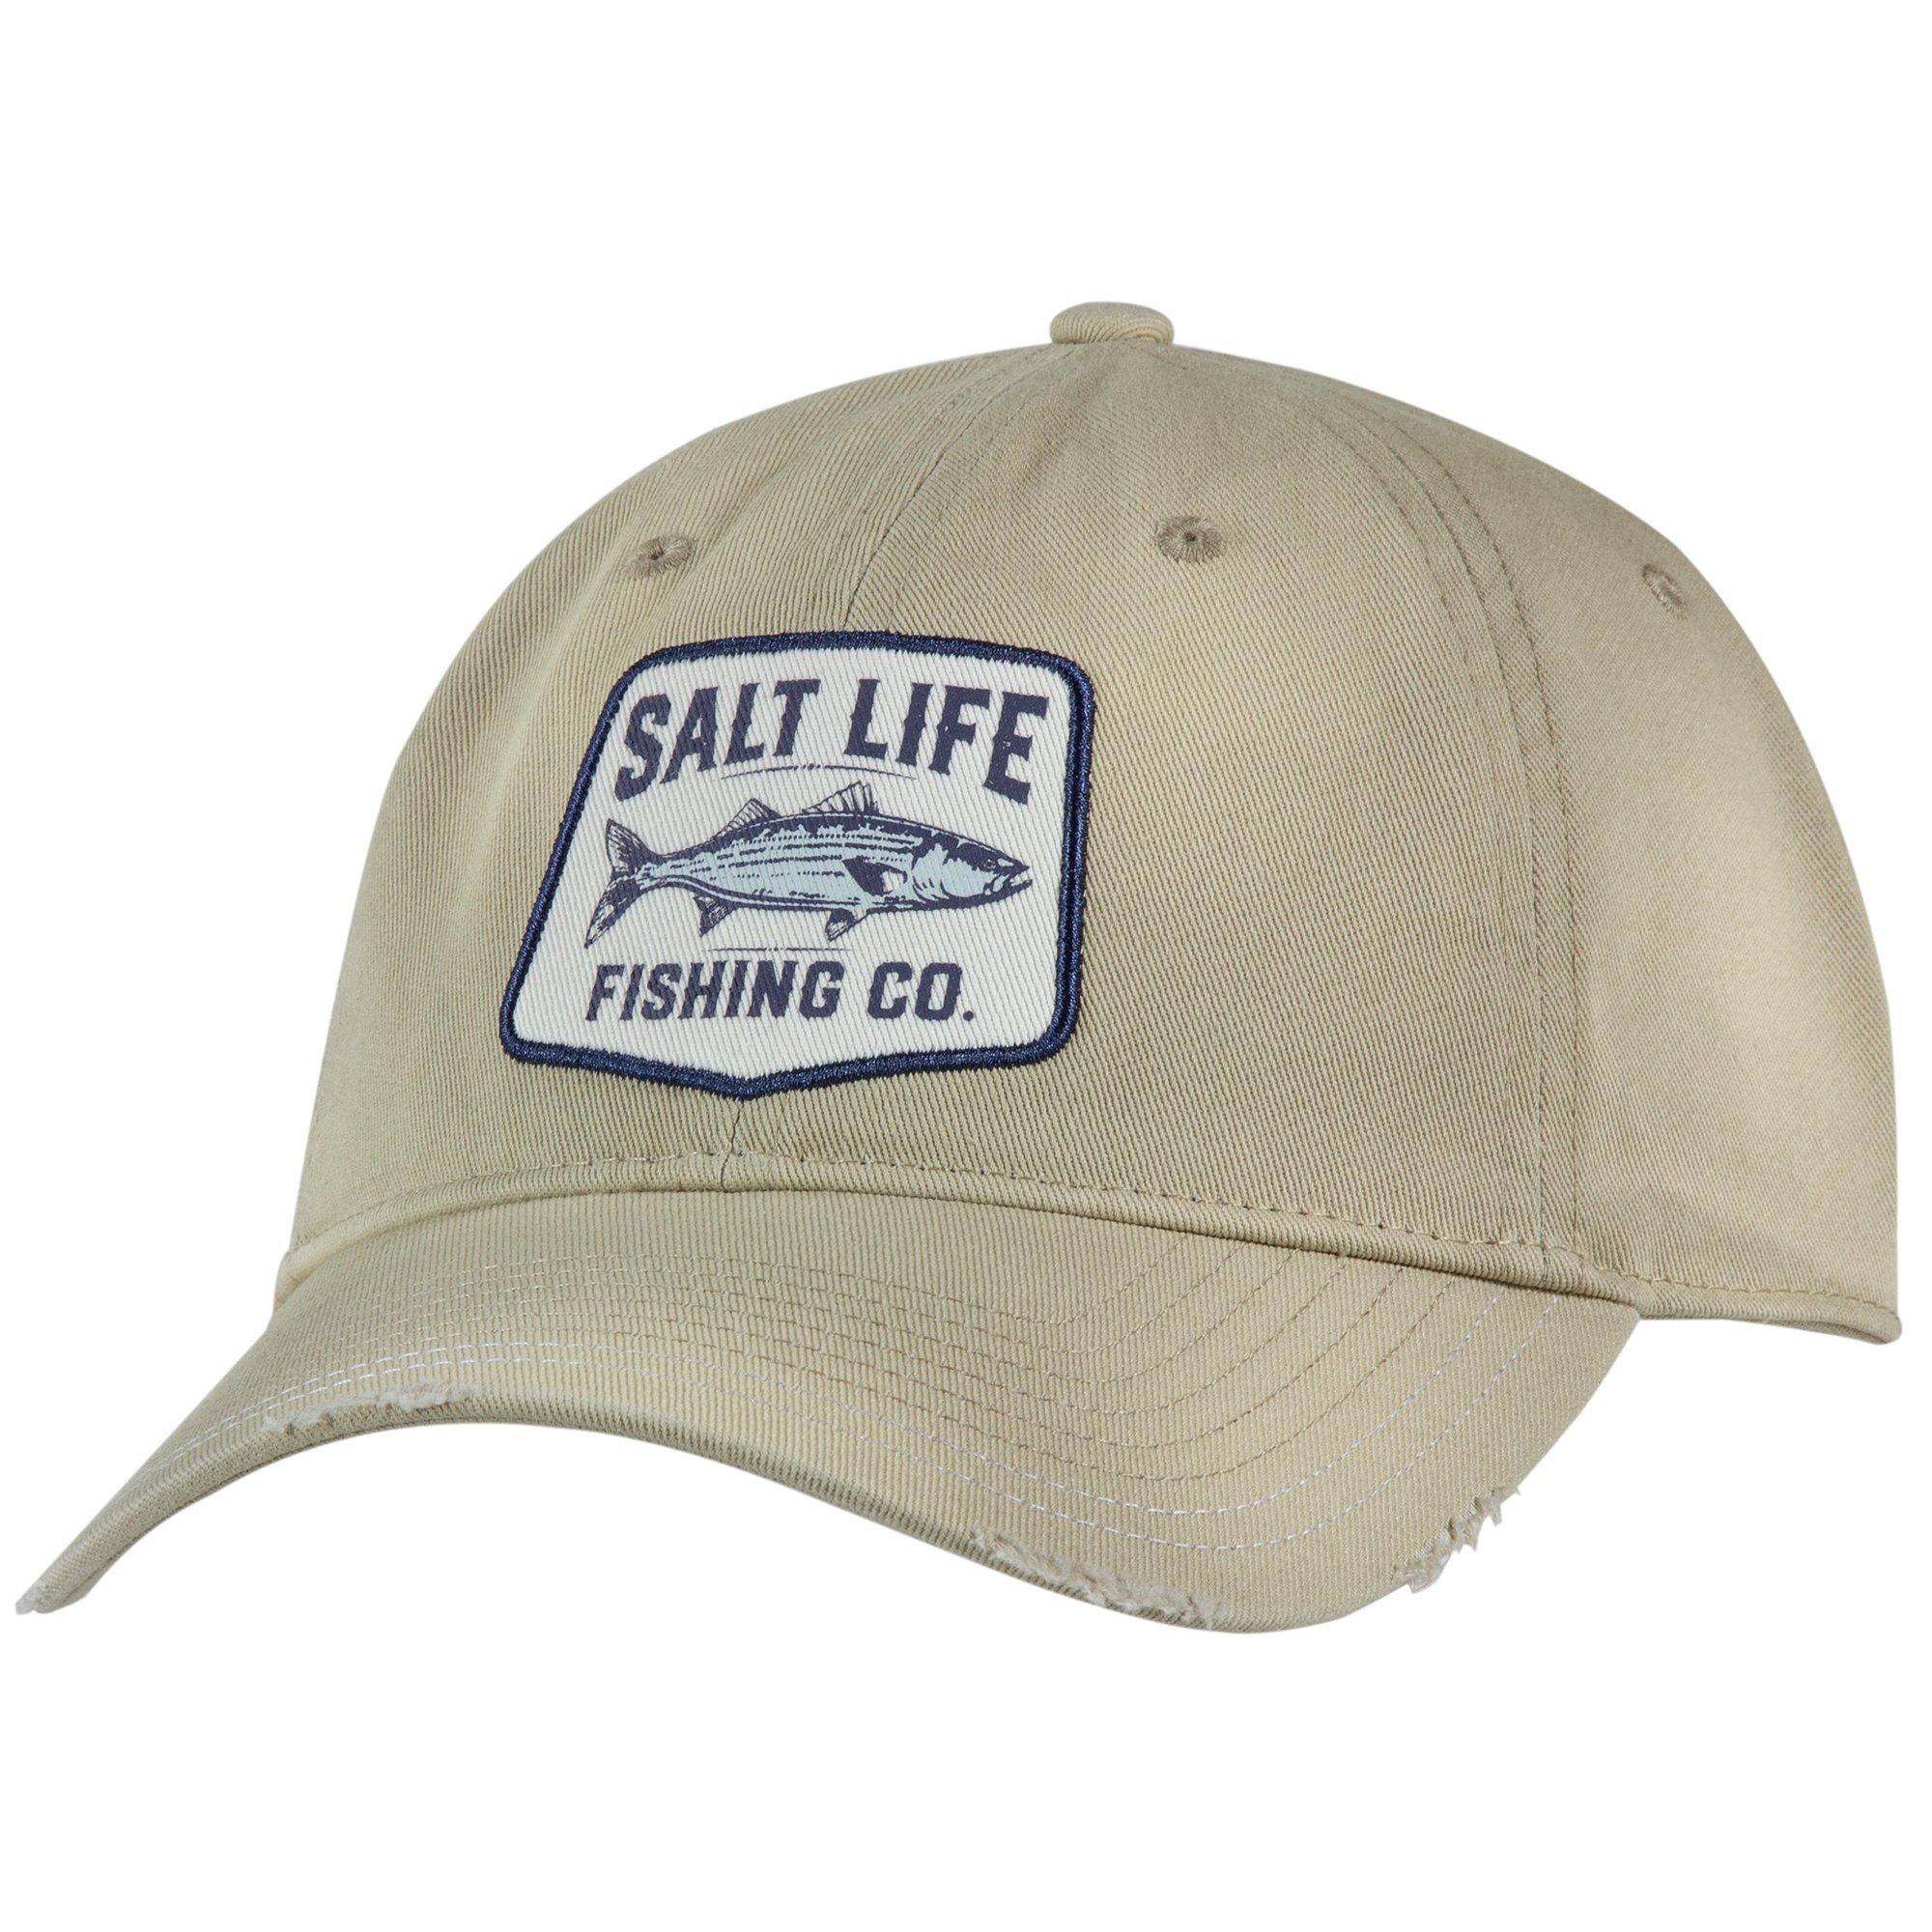 https://images.beallsflorida.com/i/beallsflorida/623-7258-2122-21-yyy/*Mens-Life-On-The-Sea-Hat*?$product$&fmt=auto&qlt=default